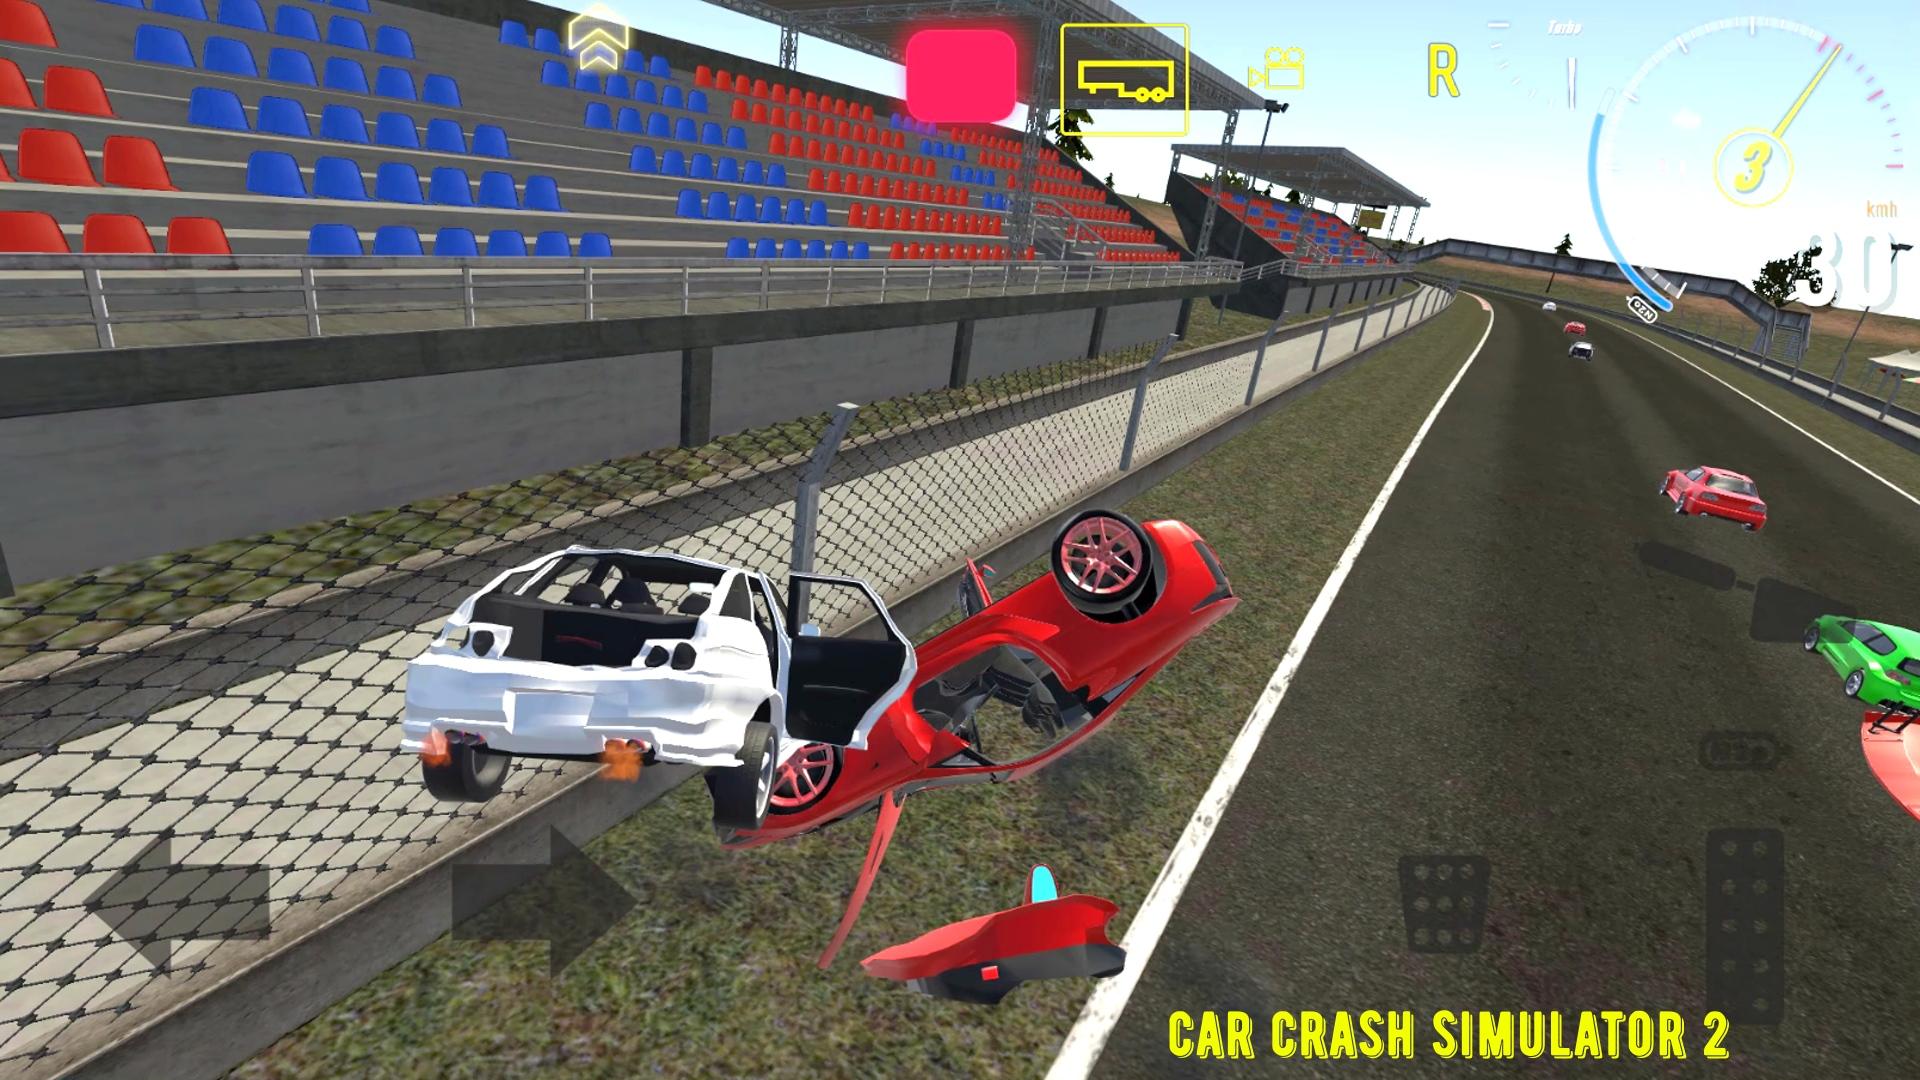 Deforming crash 2. Симулятор аварий авто. Кар краш симулятор. Симулятор аварий повреждений драйв. Hittite games car crash.